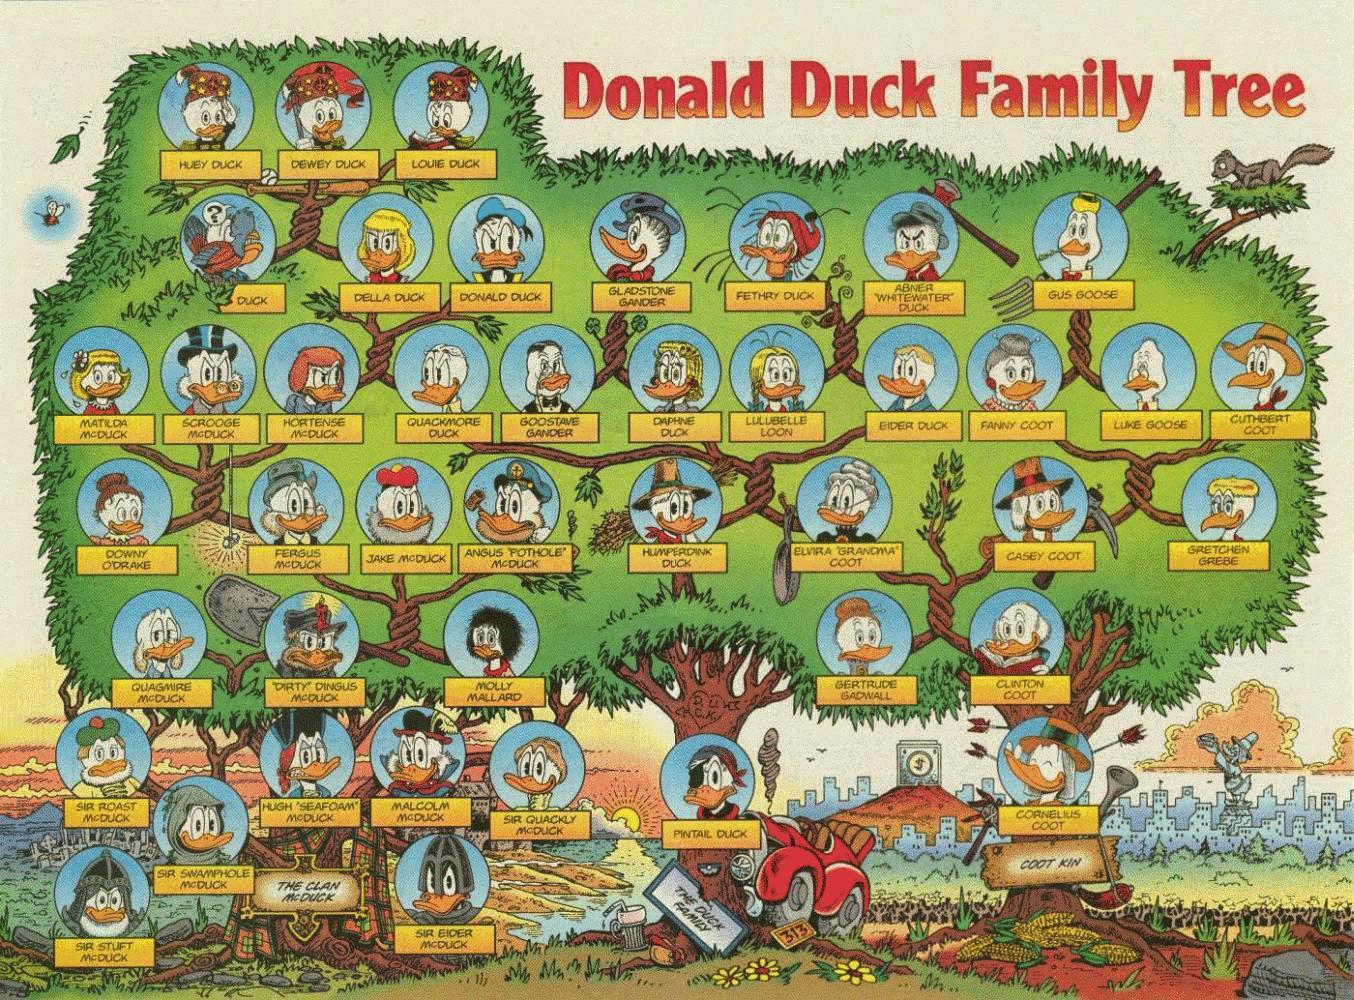 The Duck Family Tree